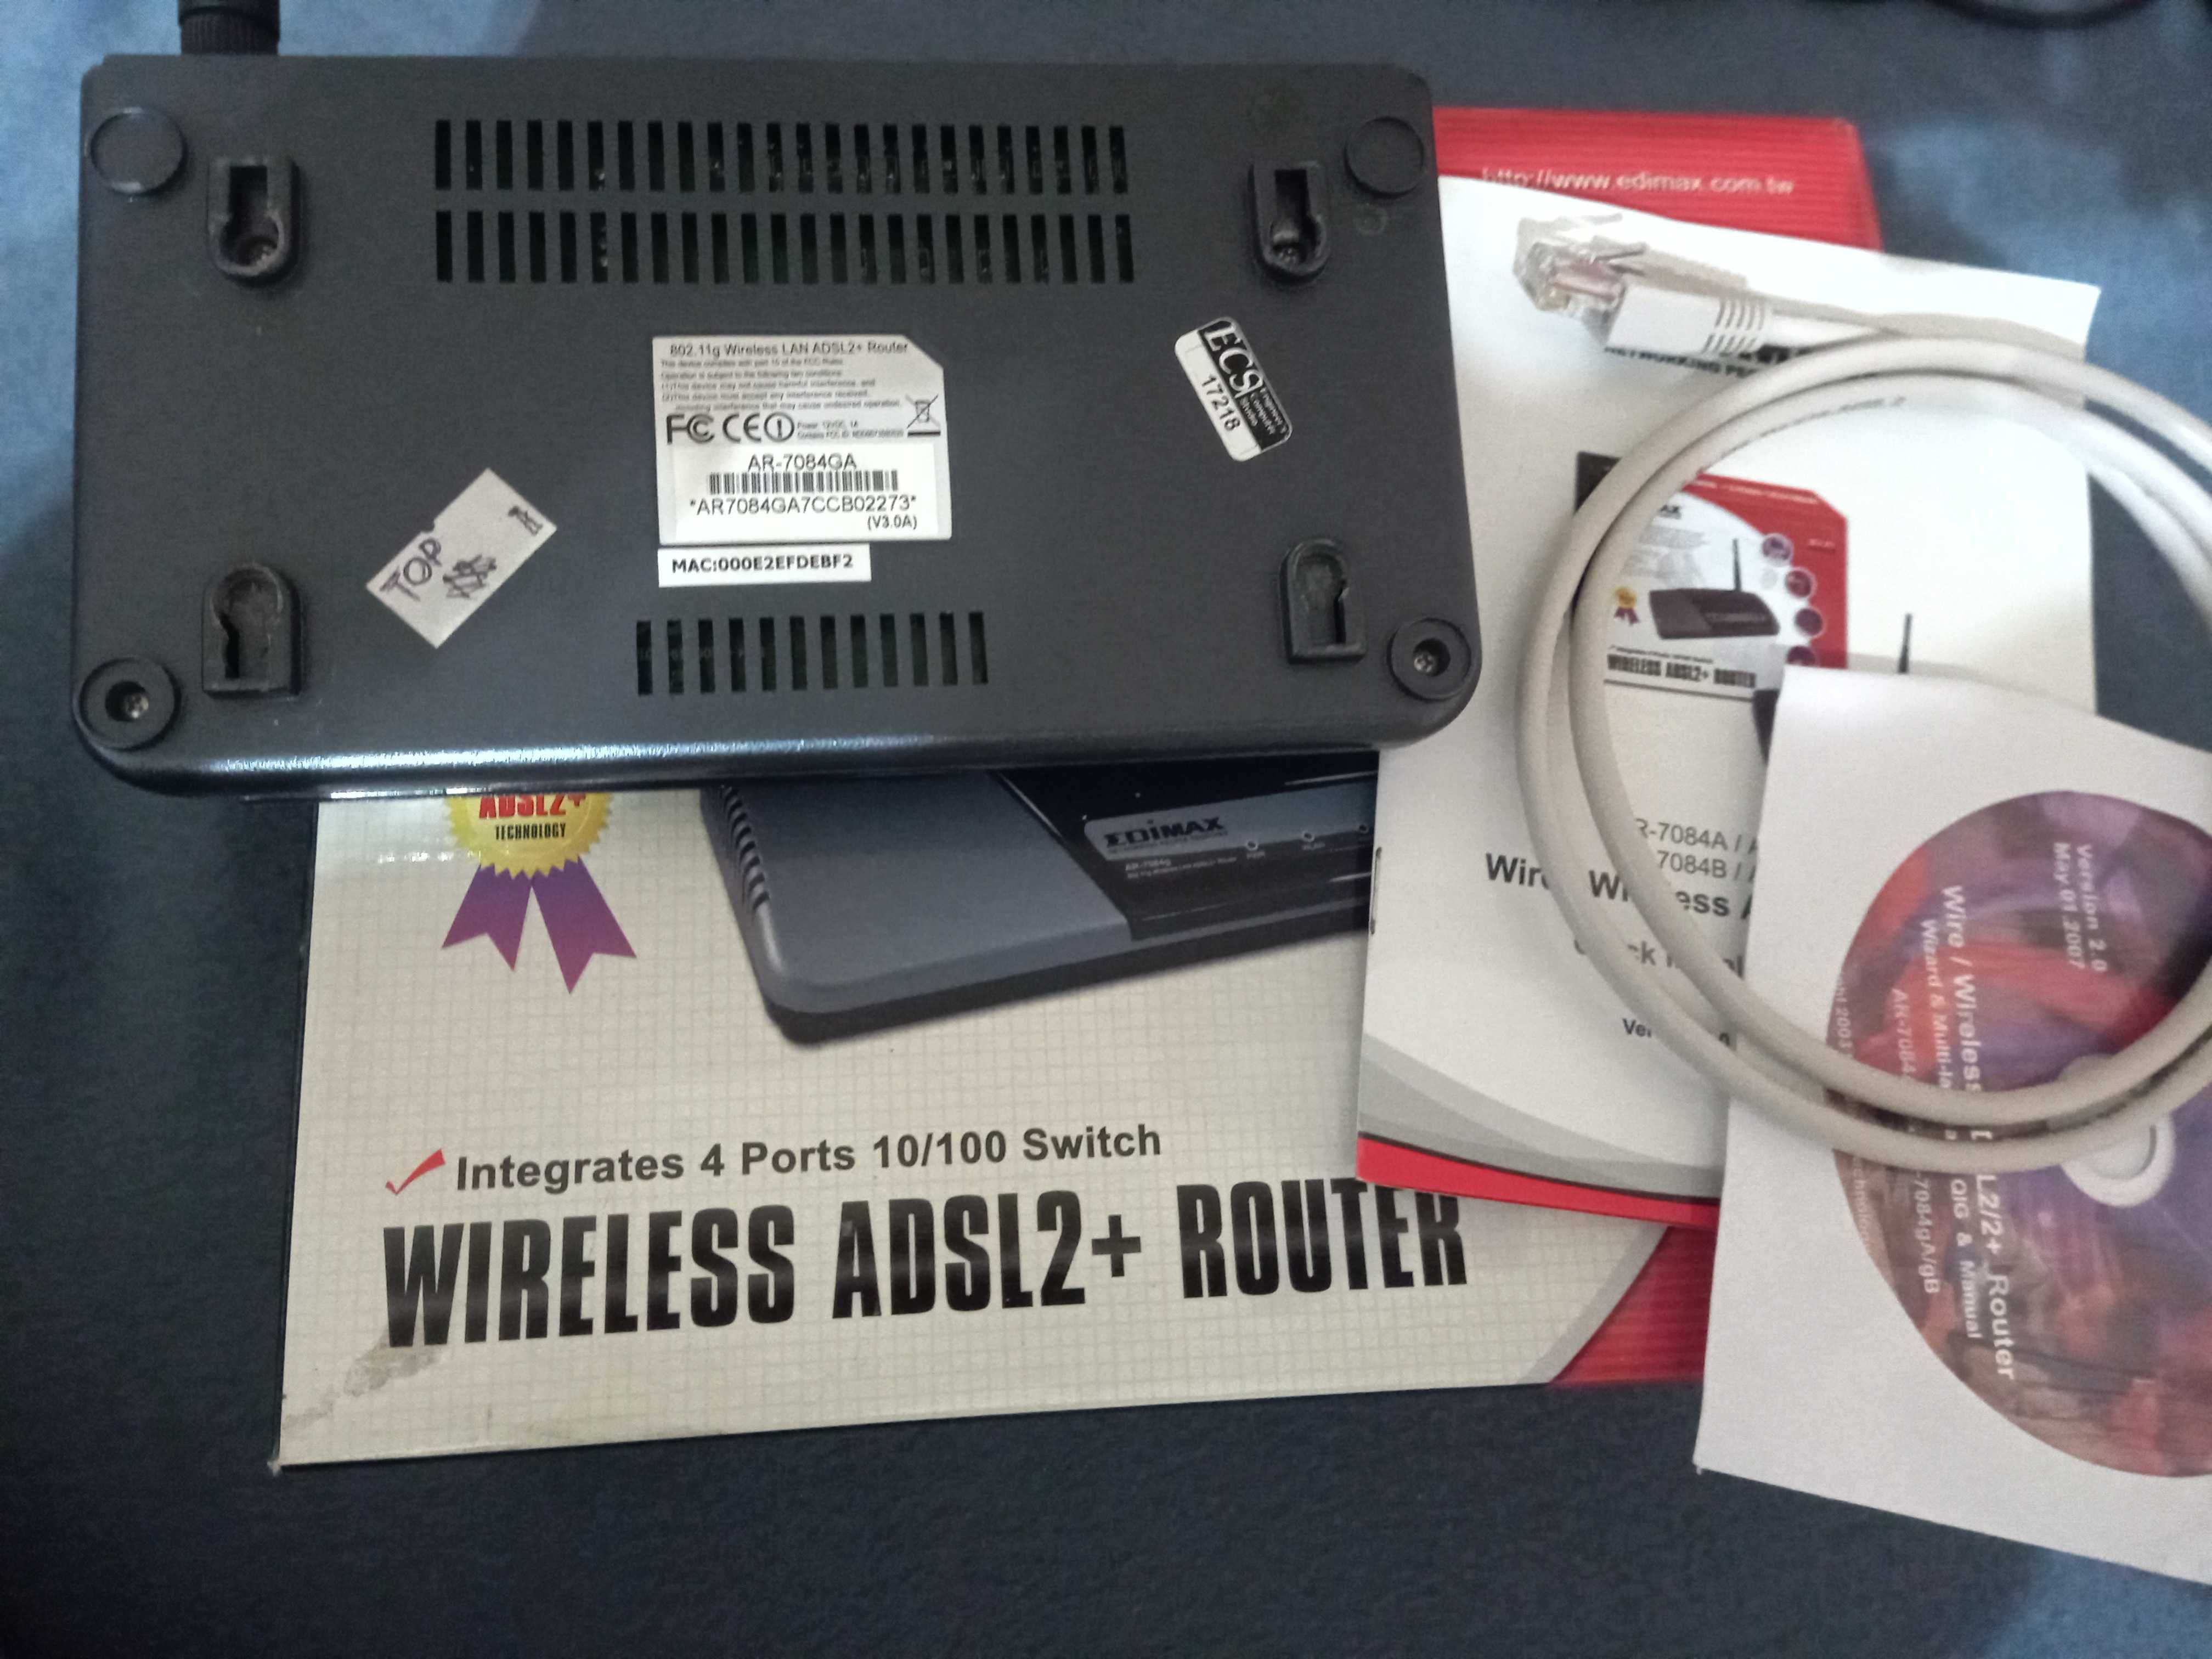 EDIMAX AR-7084gA Router/LAN/WiFi/Modem ADSL